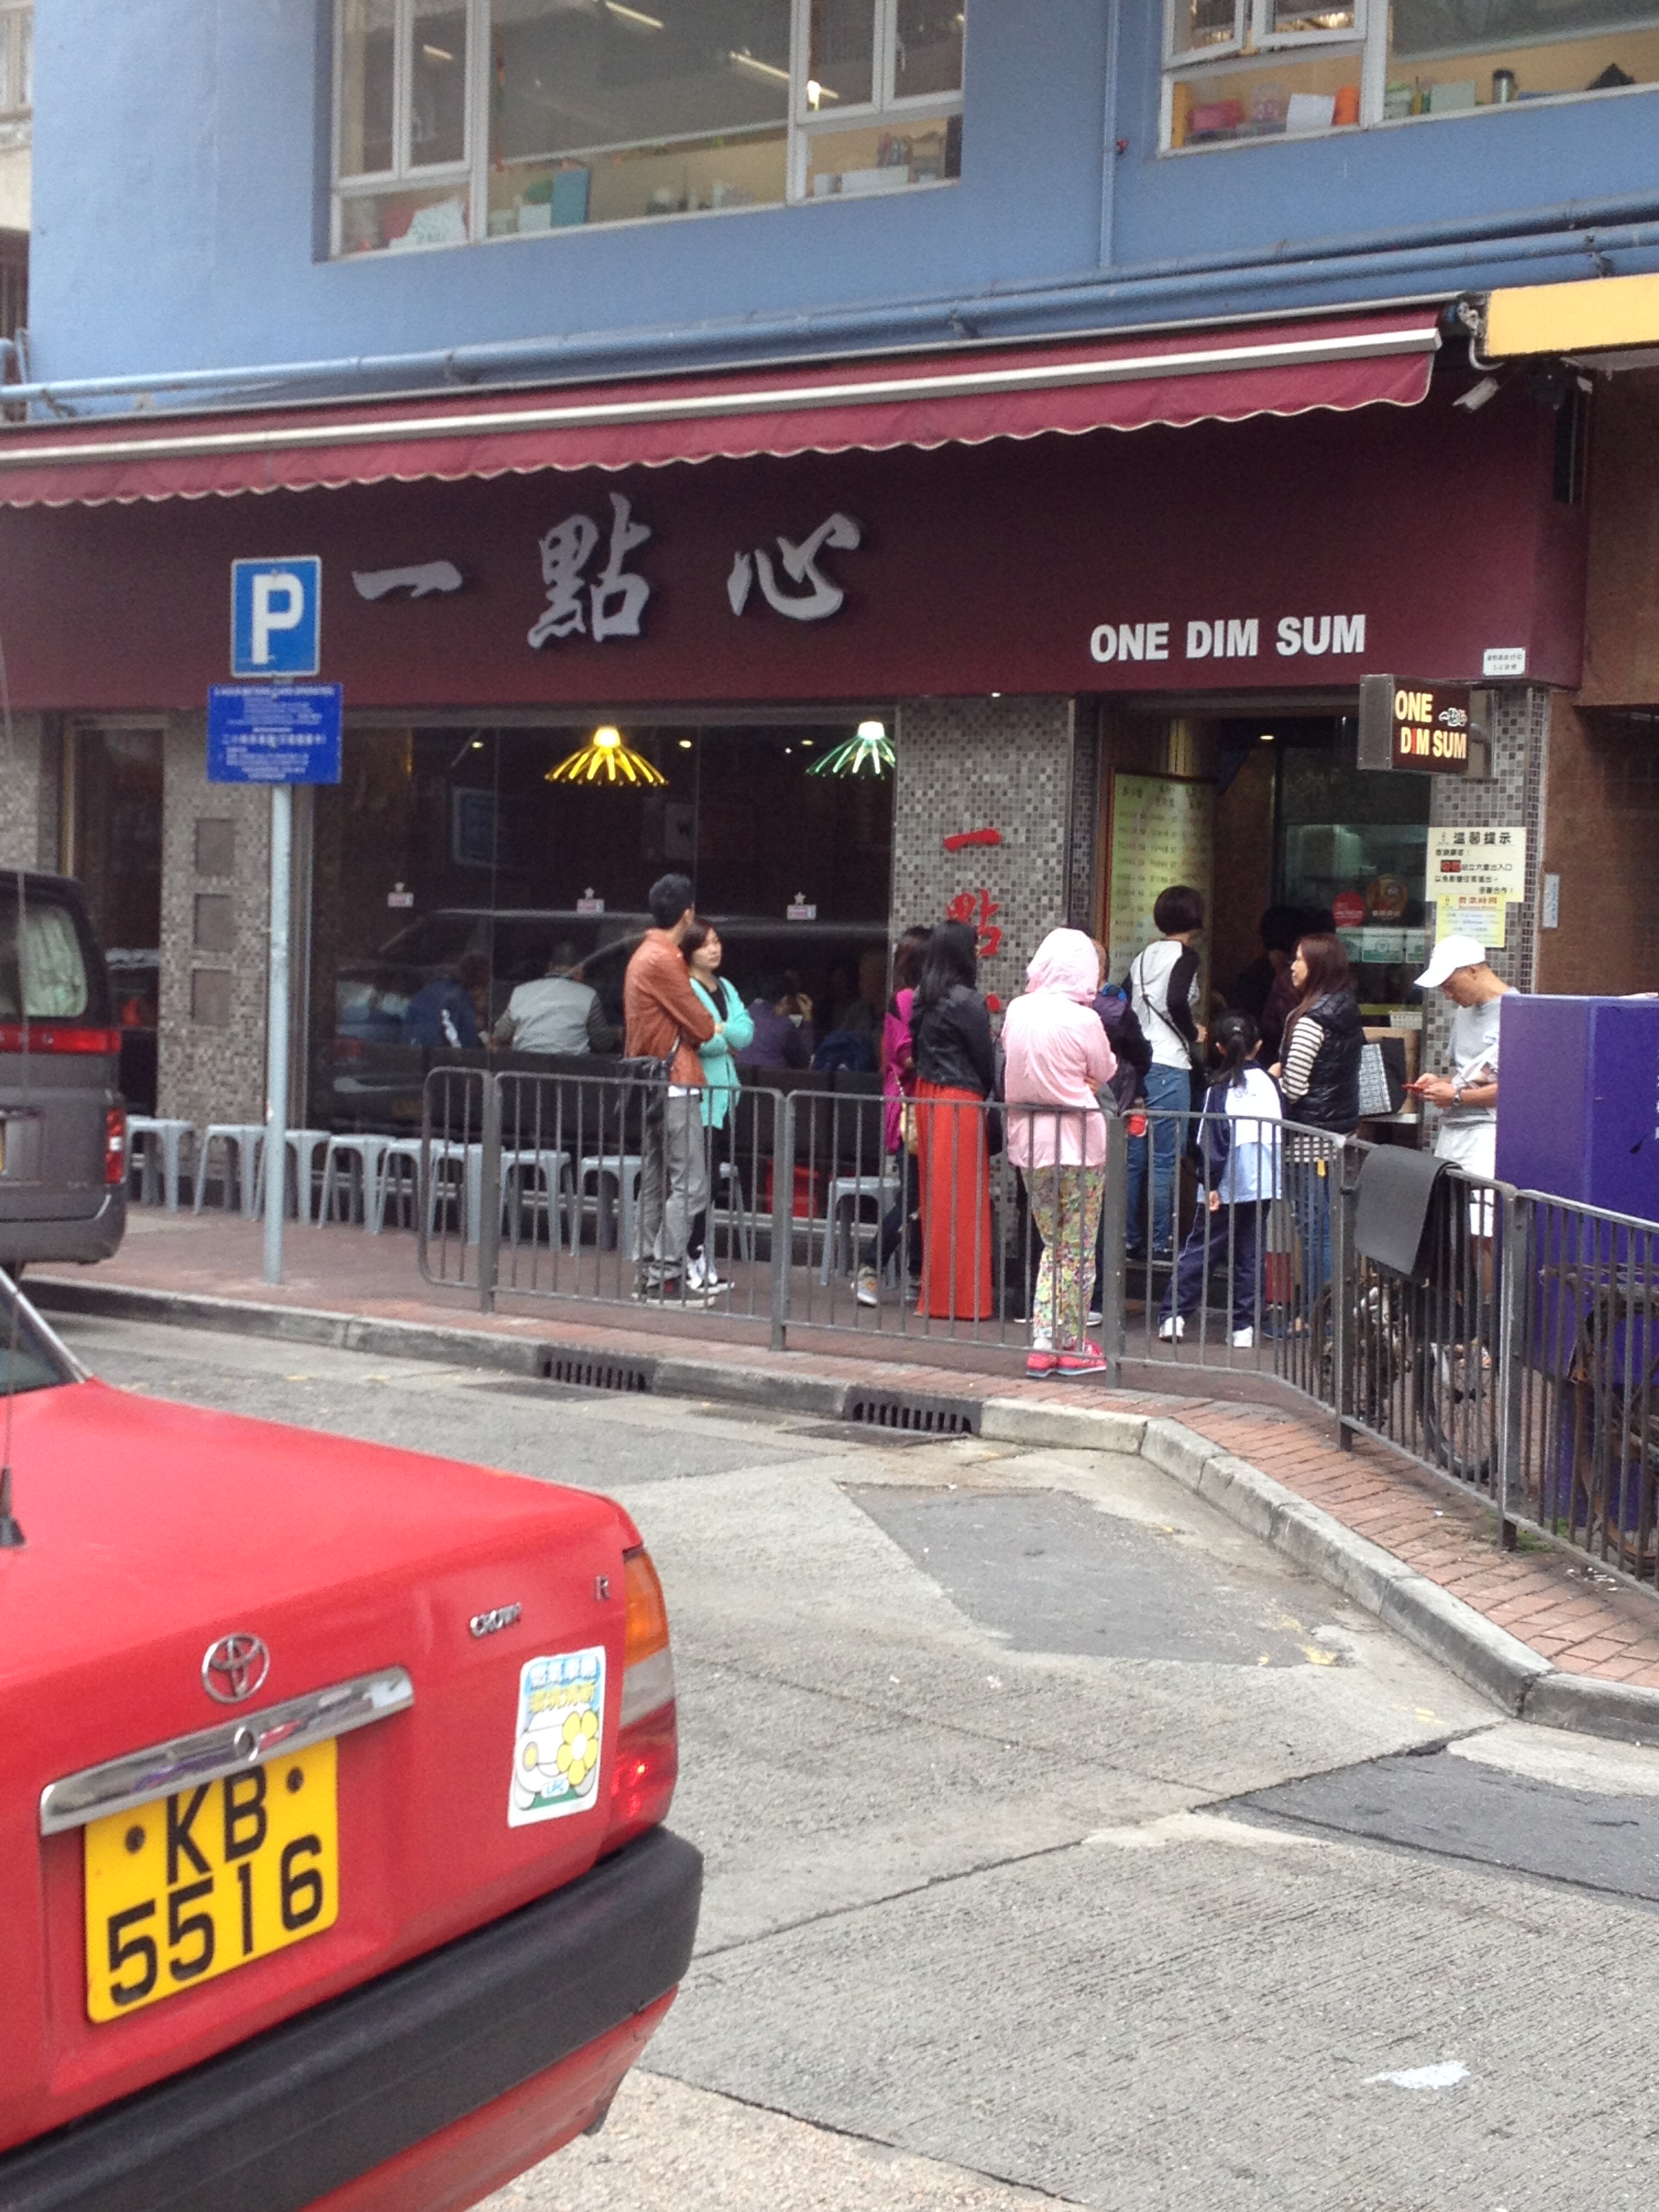 One Dim Sum restaurant, Kowloon, Hong Kong